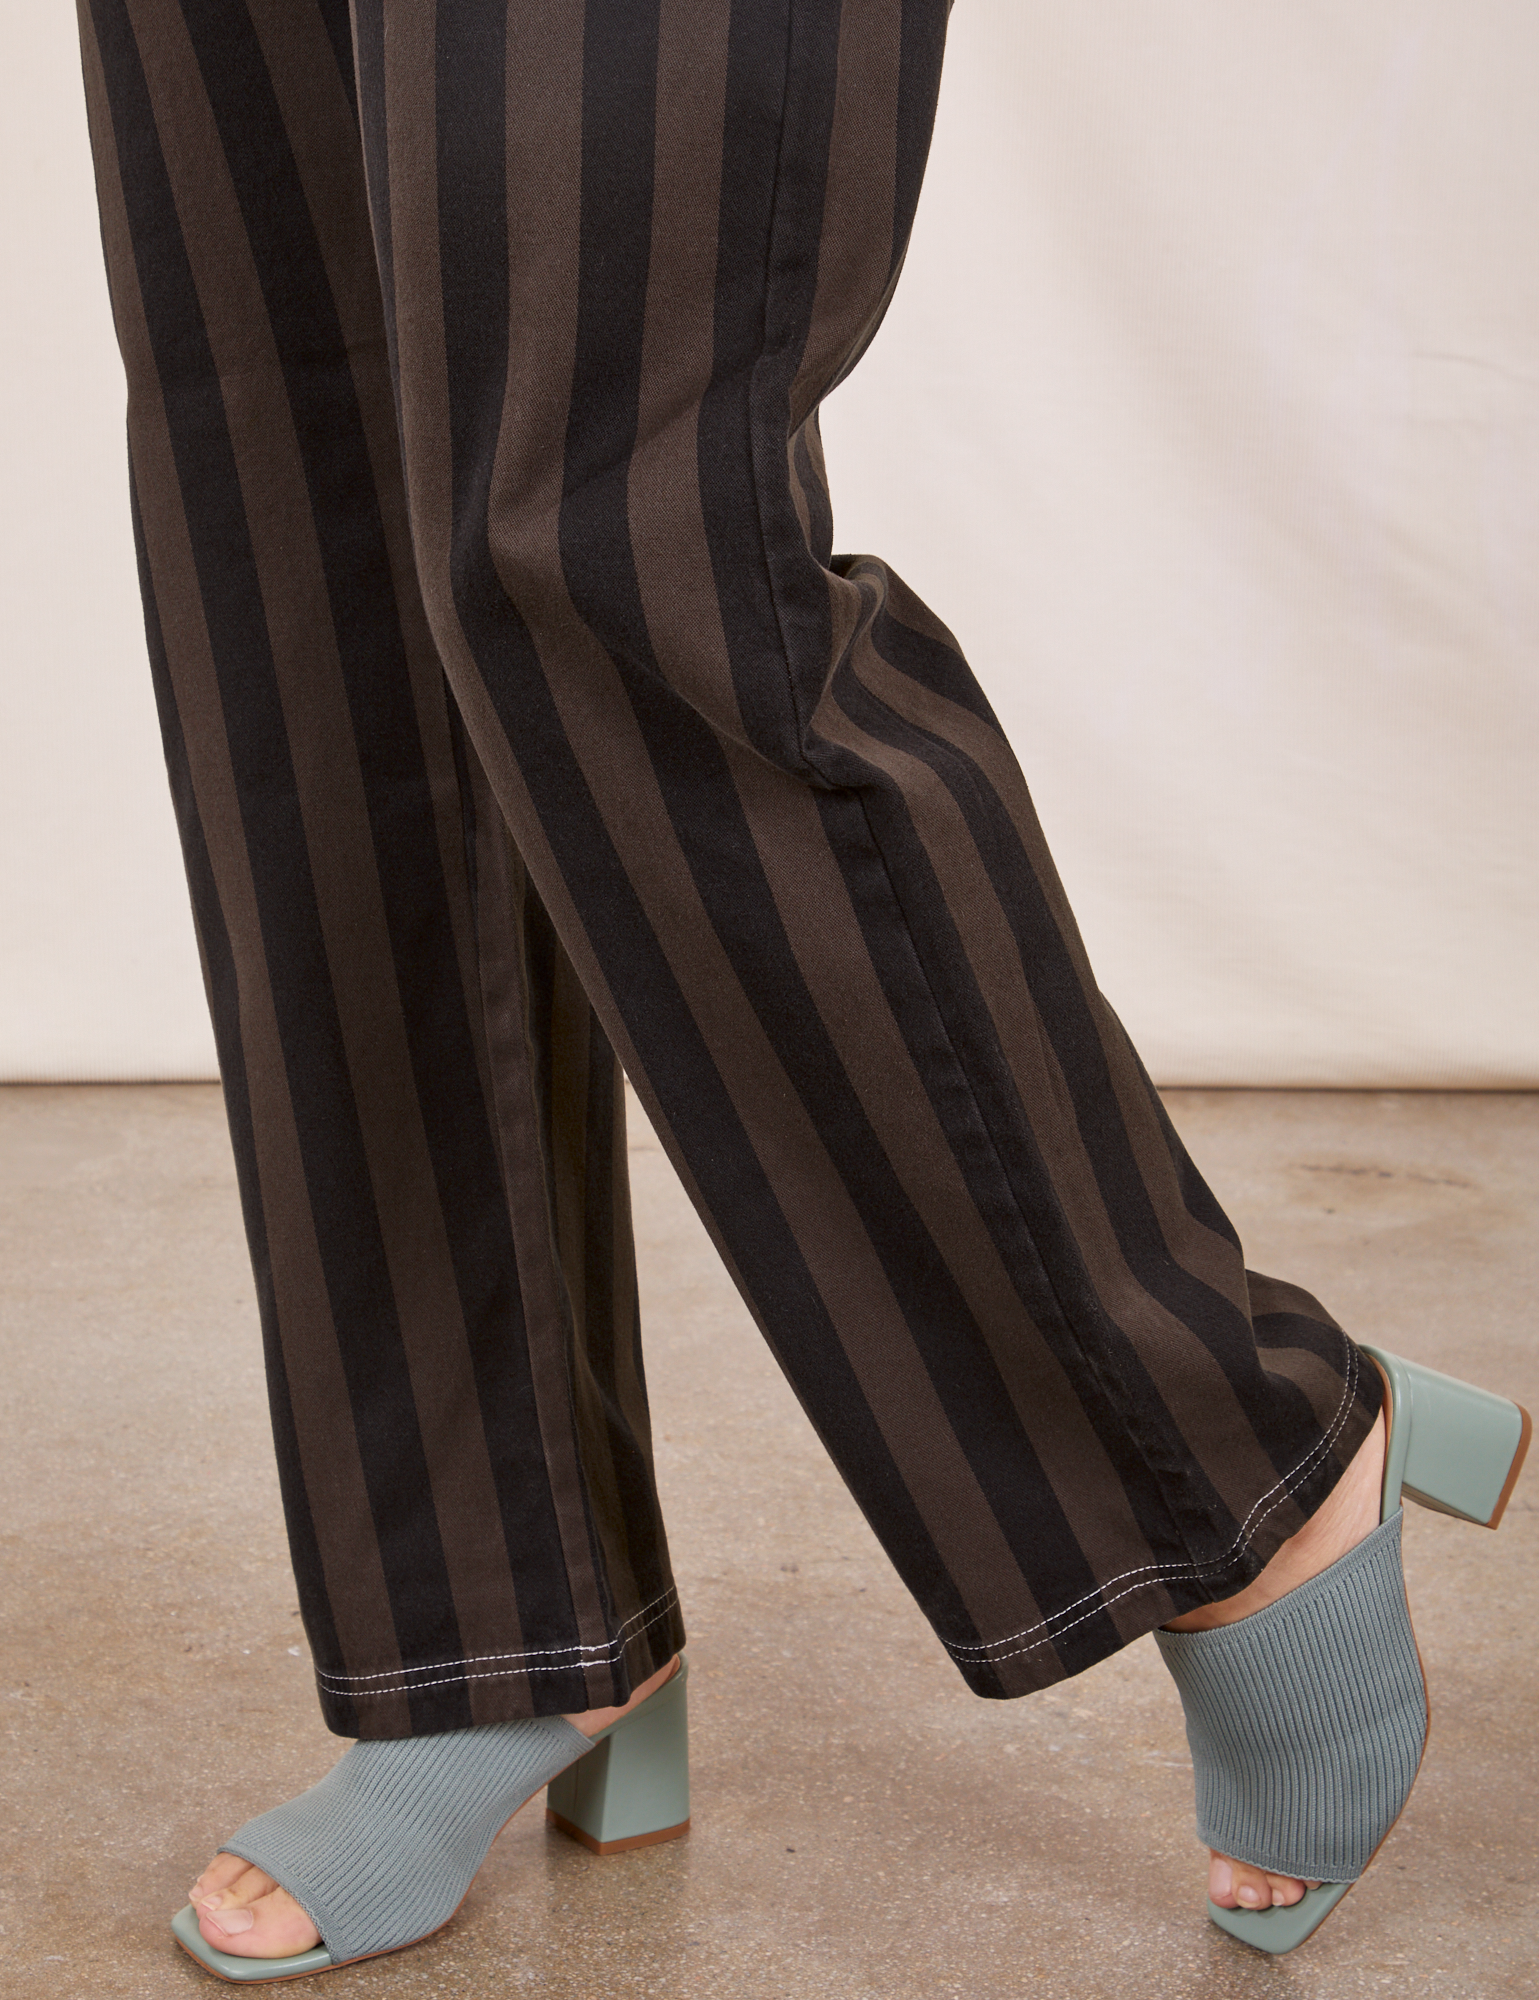 Black Striped Work Pants in Espresso pant leg close up on Tiara